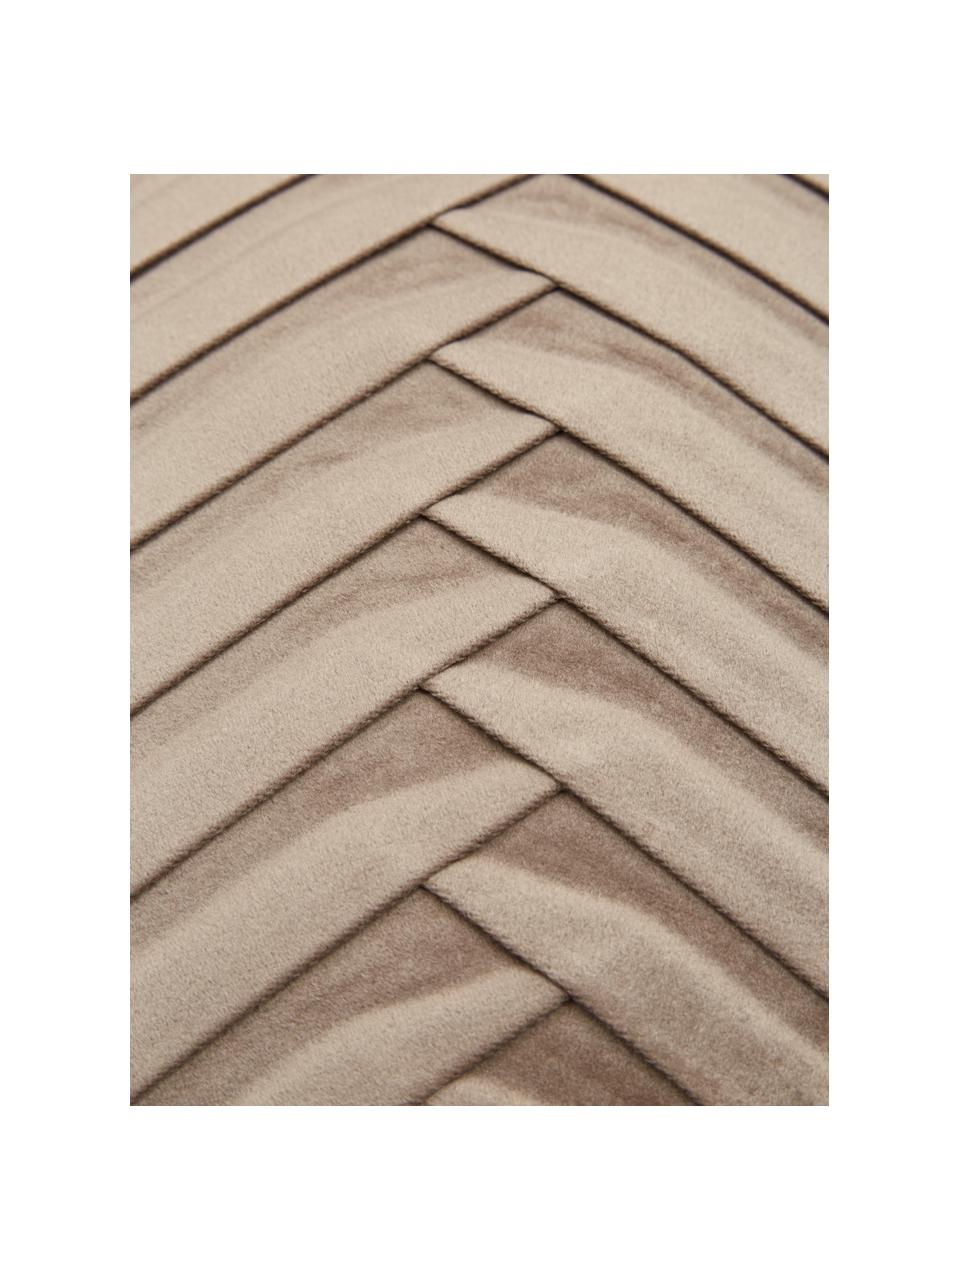 Fluwelen kussenhoes Lucie in taupe met structuur-oppervlak, 100% fluweel (polyester), Beige, B 30 x L 50 cm